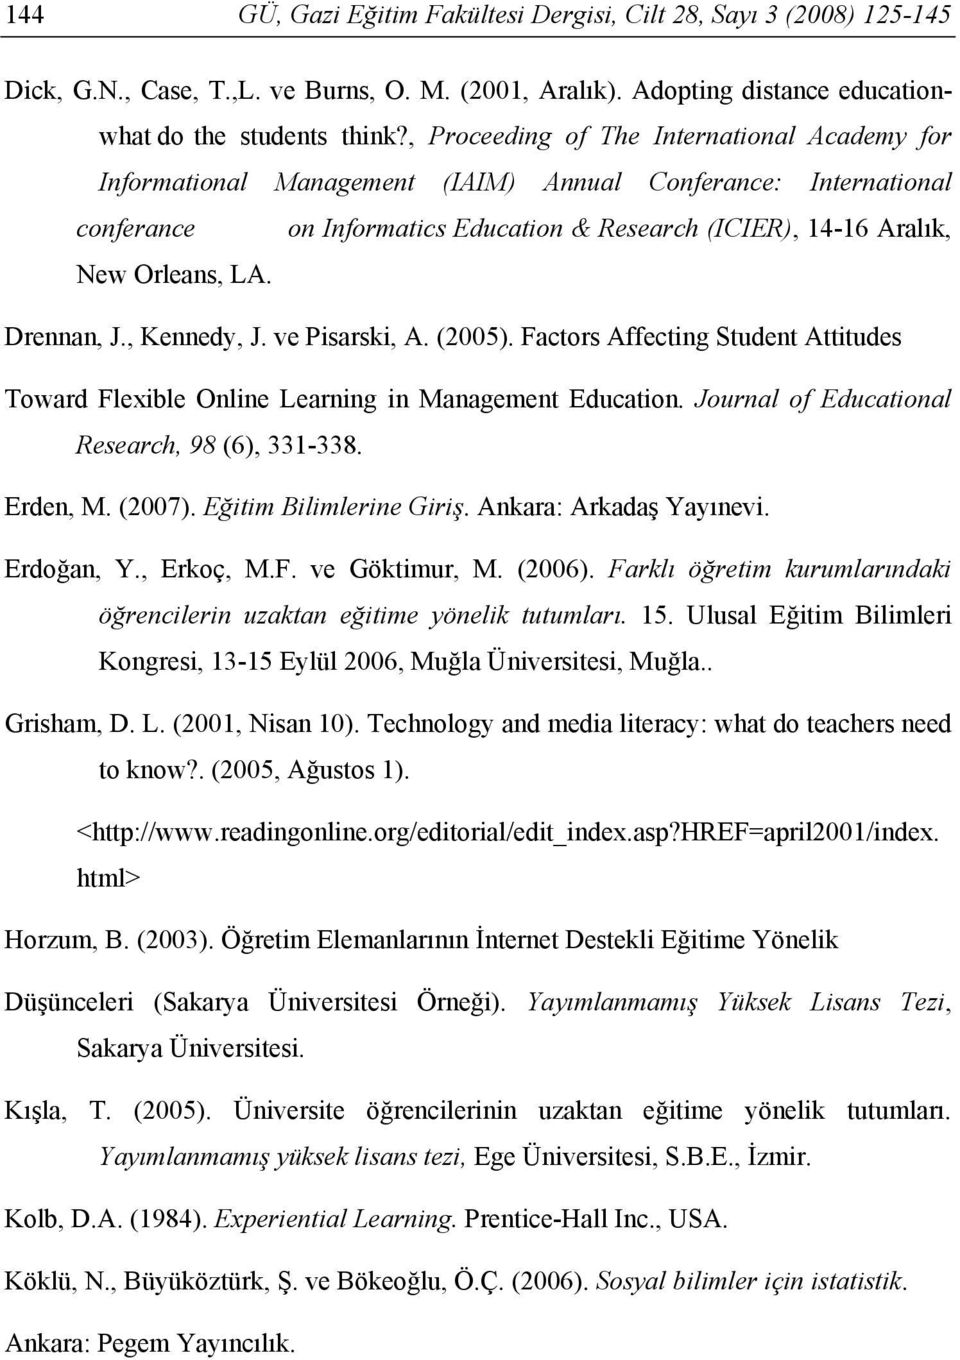 Drennan, J., Kennedy, J. ve Pisarski, A. (2005). Factors Affecting Student Attitudes Toward Flexible Online Learning in Management Education. Journal of Educational Research, 98 (6), 331-338.